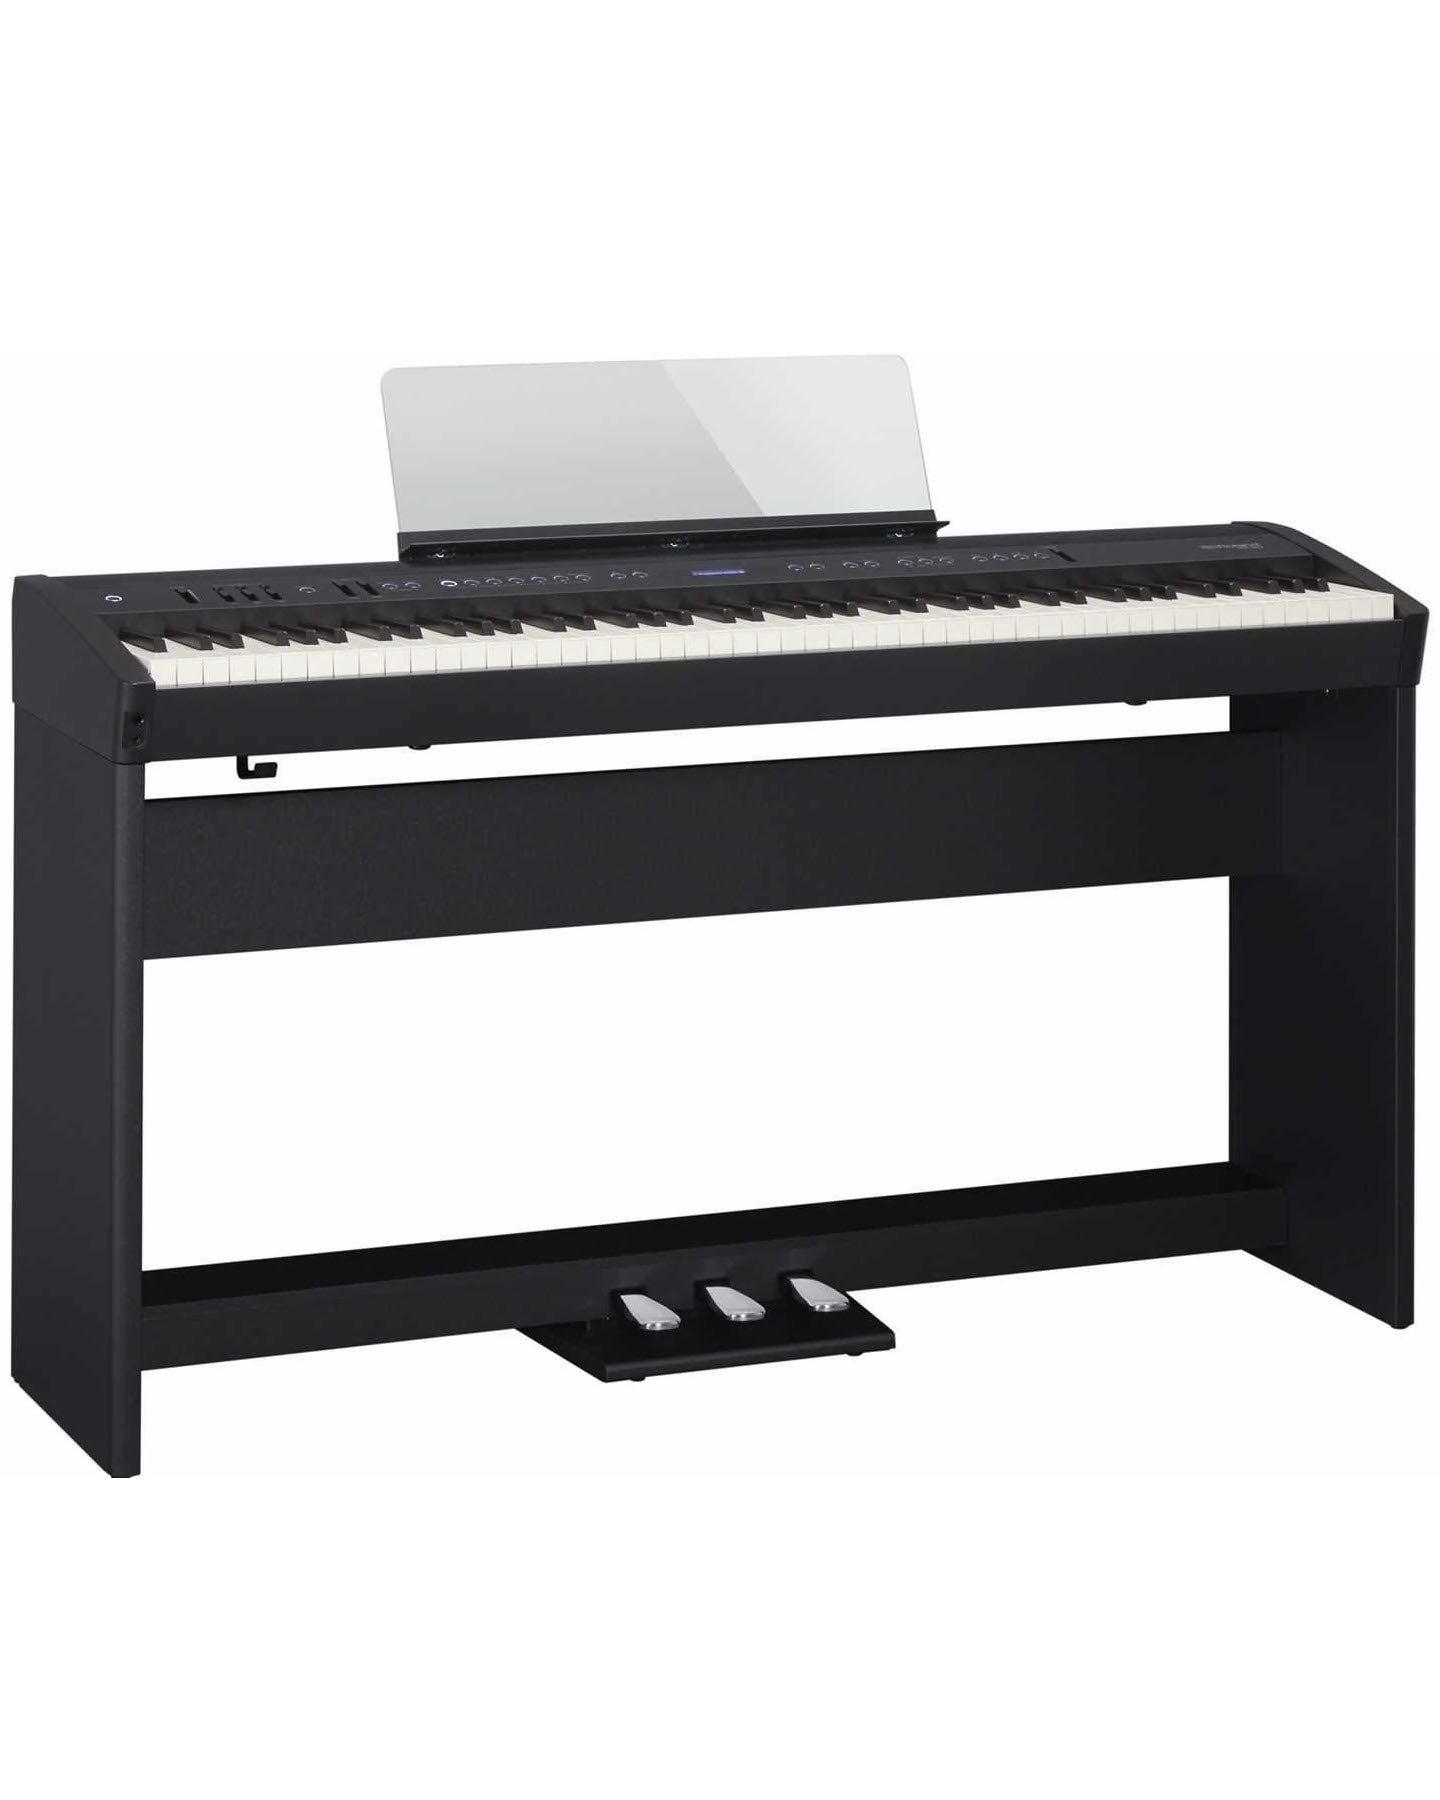 SuperNATURAL Digital Piano w/Stand and Pedalboard, Black